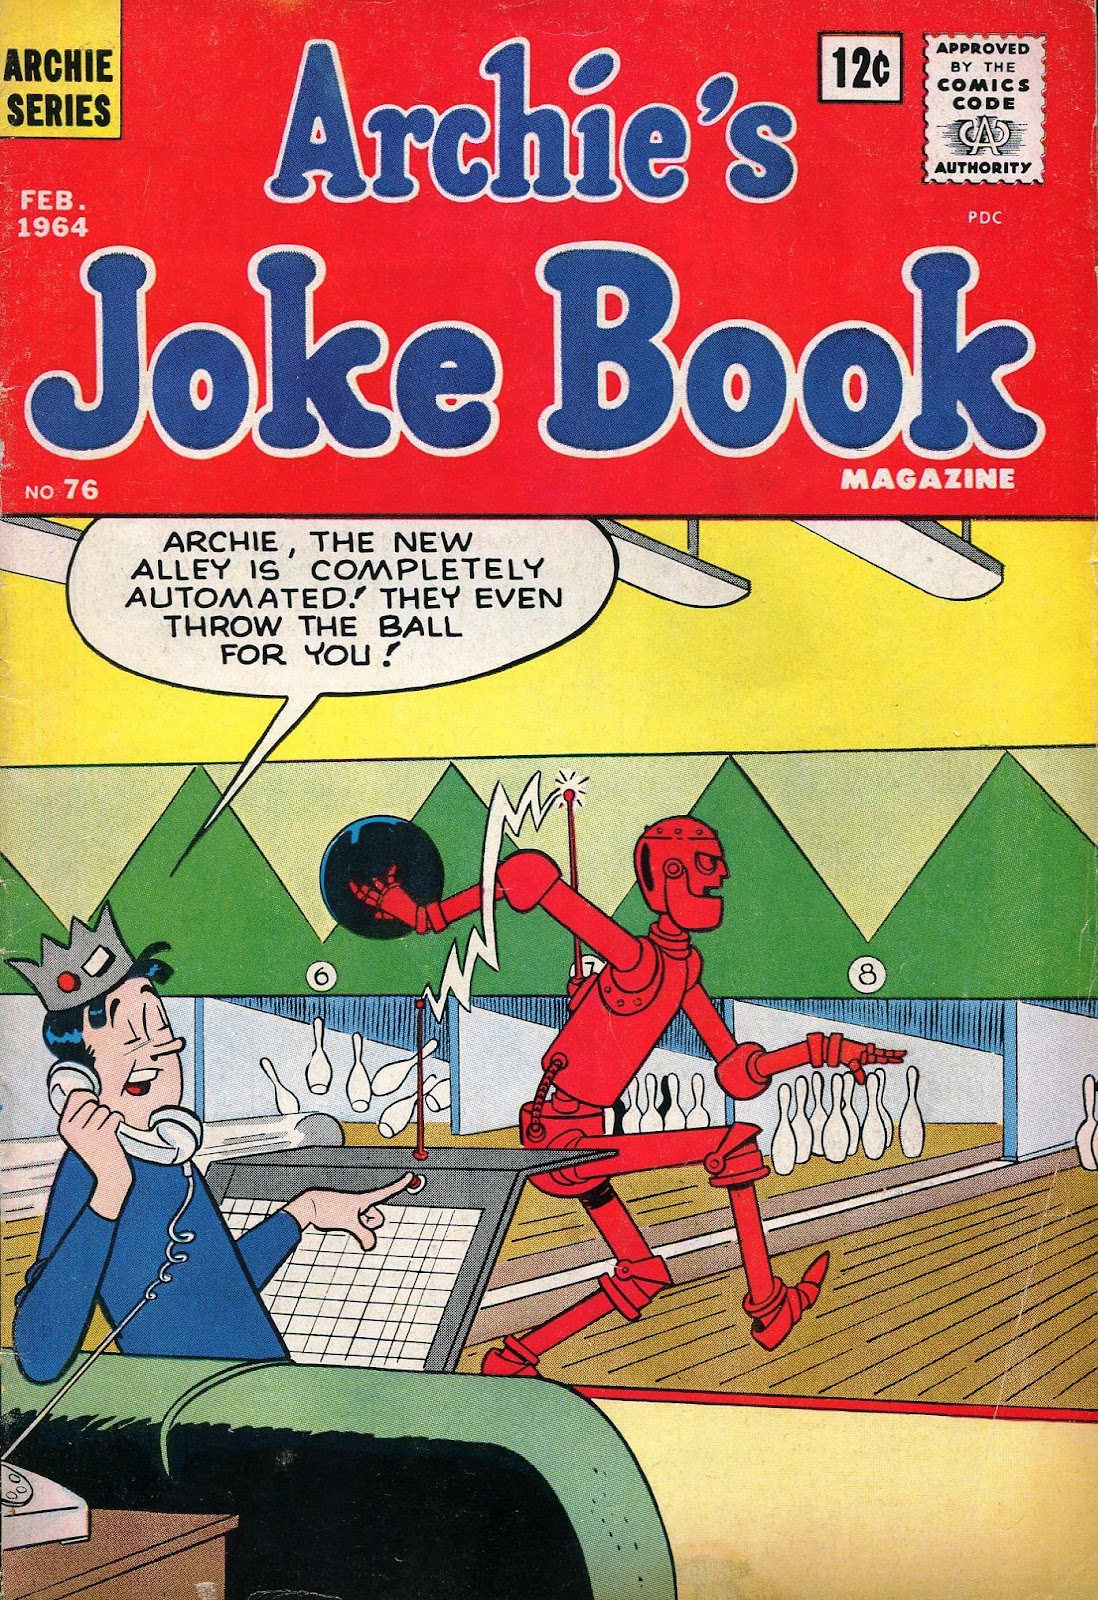 Archie's Joke Book Magazine issue 76 - Page 1